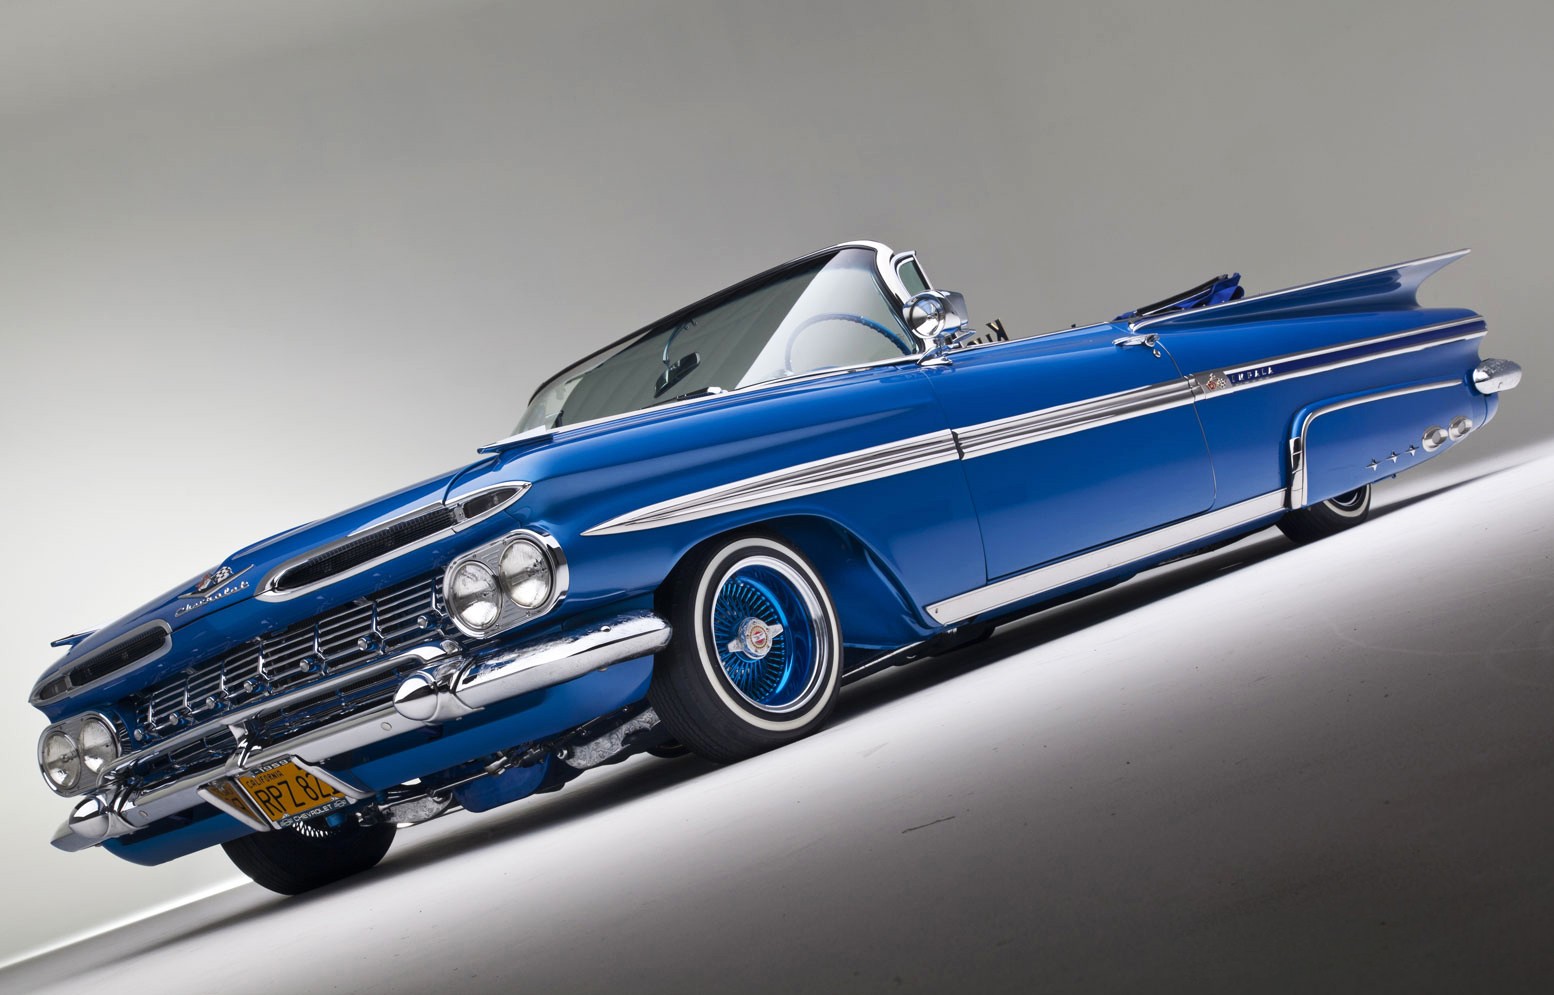 General 1554x995 car blue cars vehicle oldtimers Chevrolet low car 1959 Chevrolet Impala Chevrolet Impala